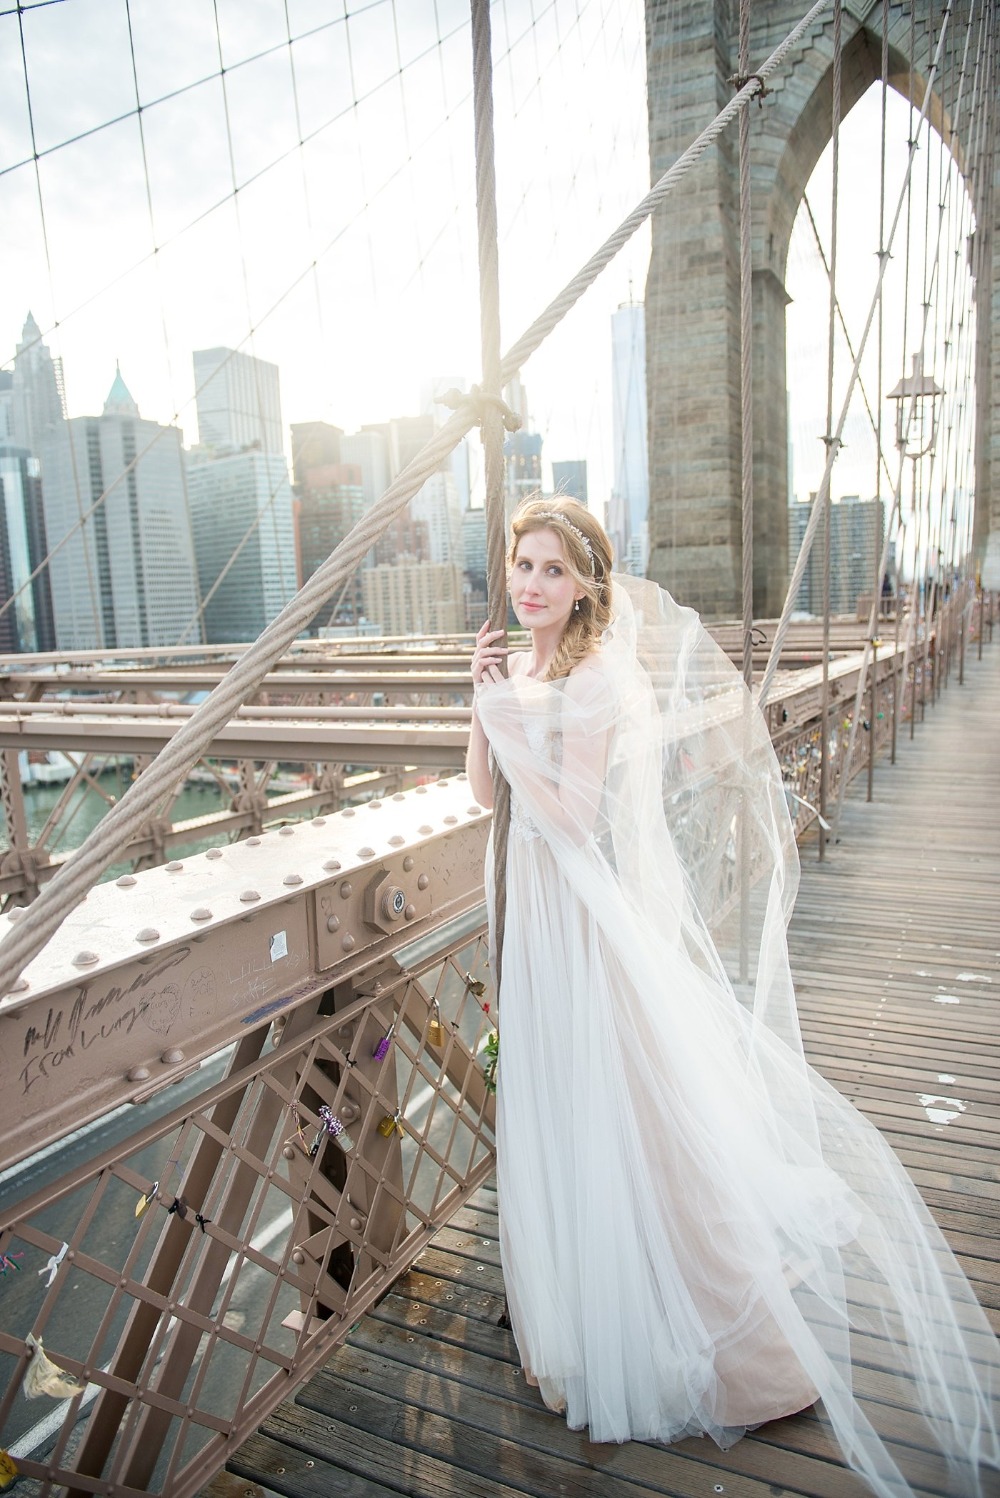 Lovely bridal portrait on the Brooklyn bridge